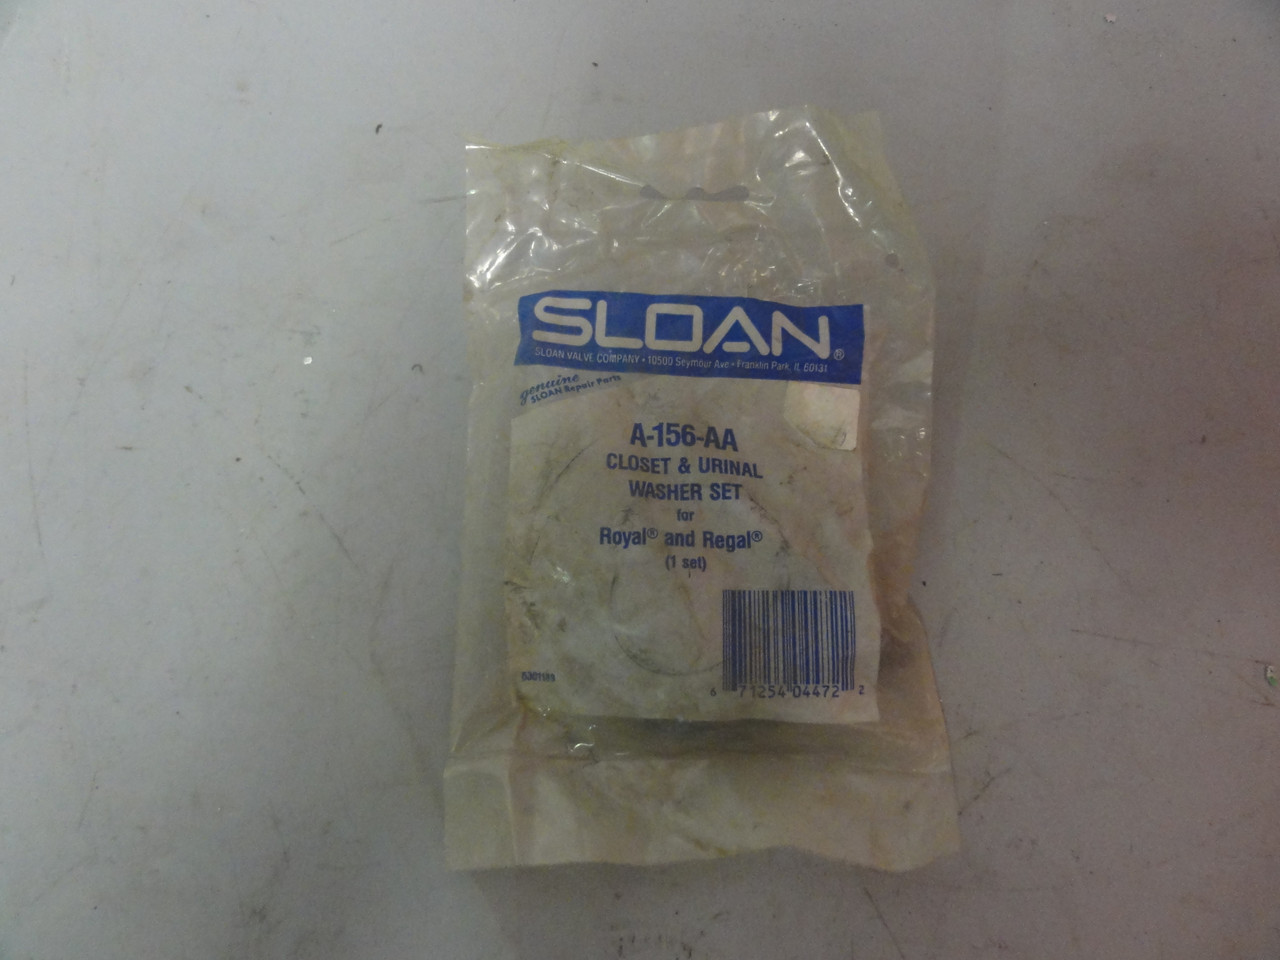 Sloan A-156-AA Closet & Urinal Washer Set - New